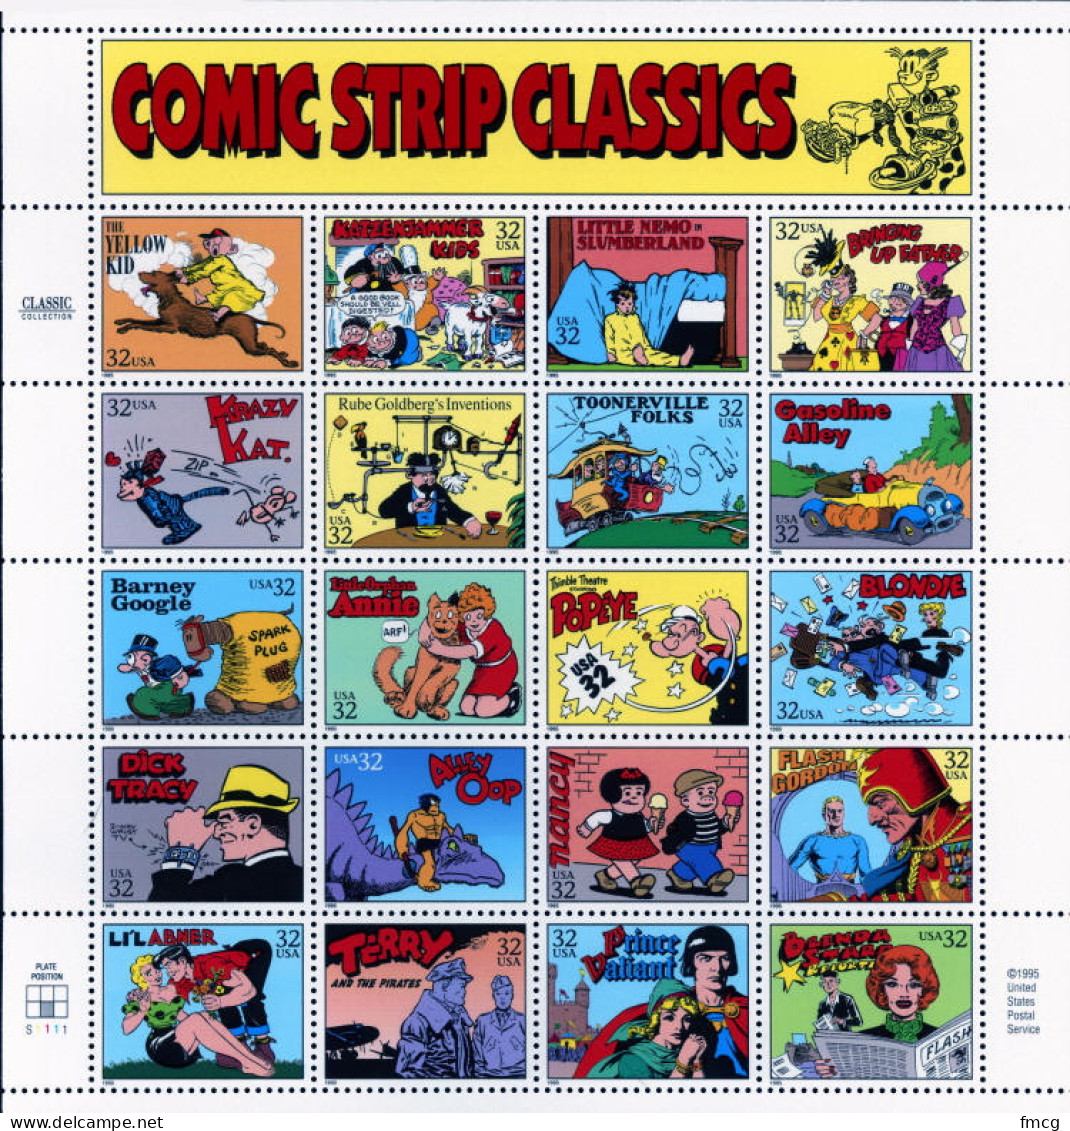 1995 Comic Strip Classics - Sheet Of 20, Mint Never Hinged - Neufs